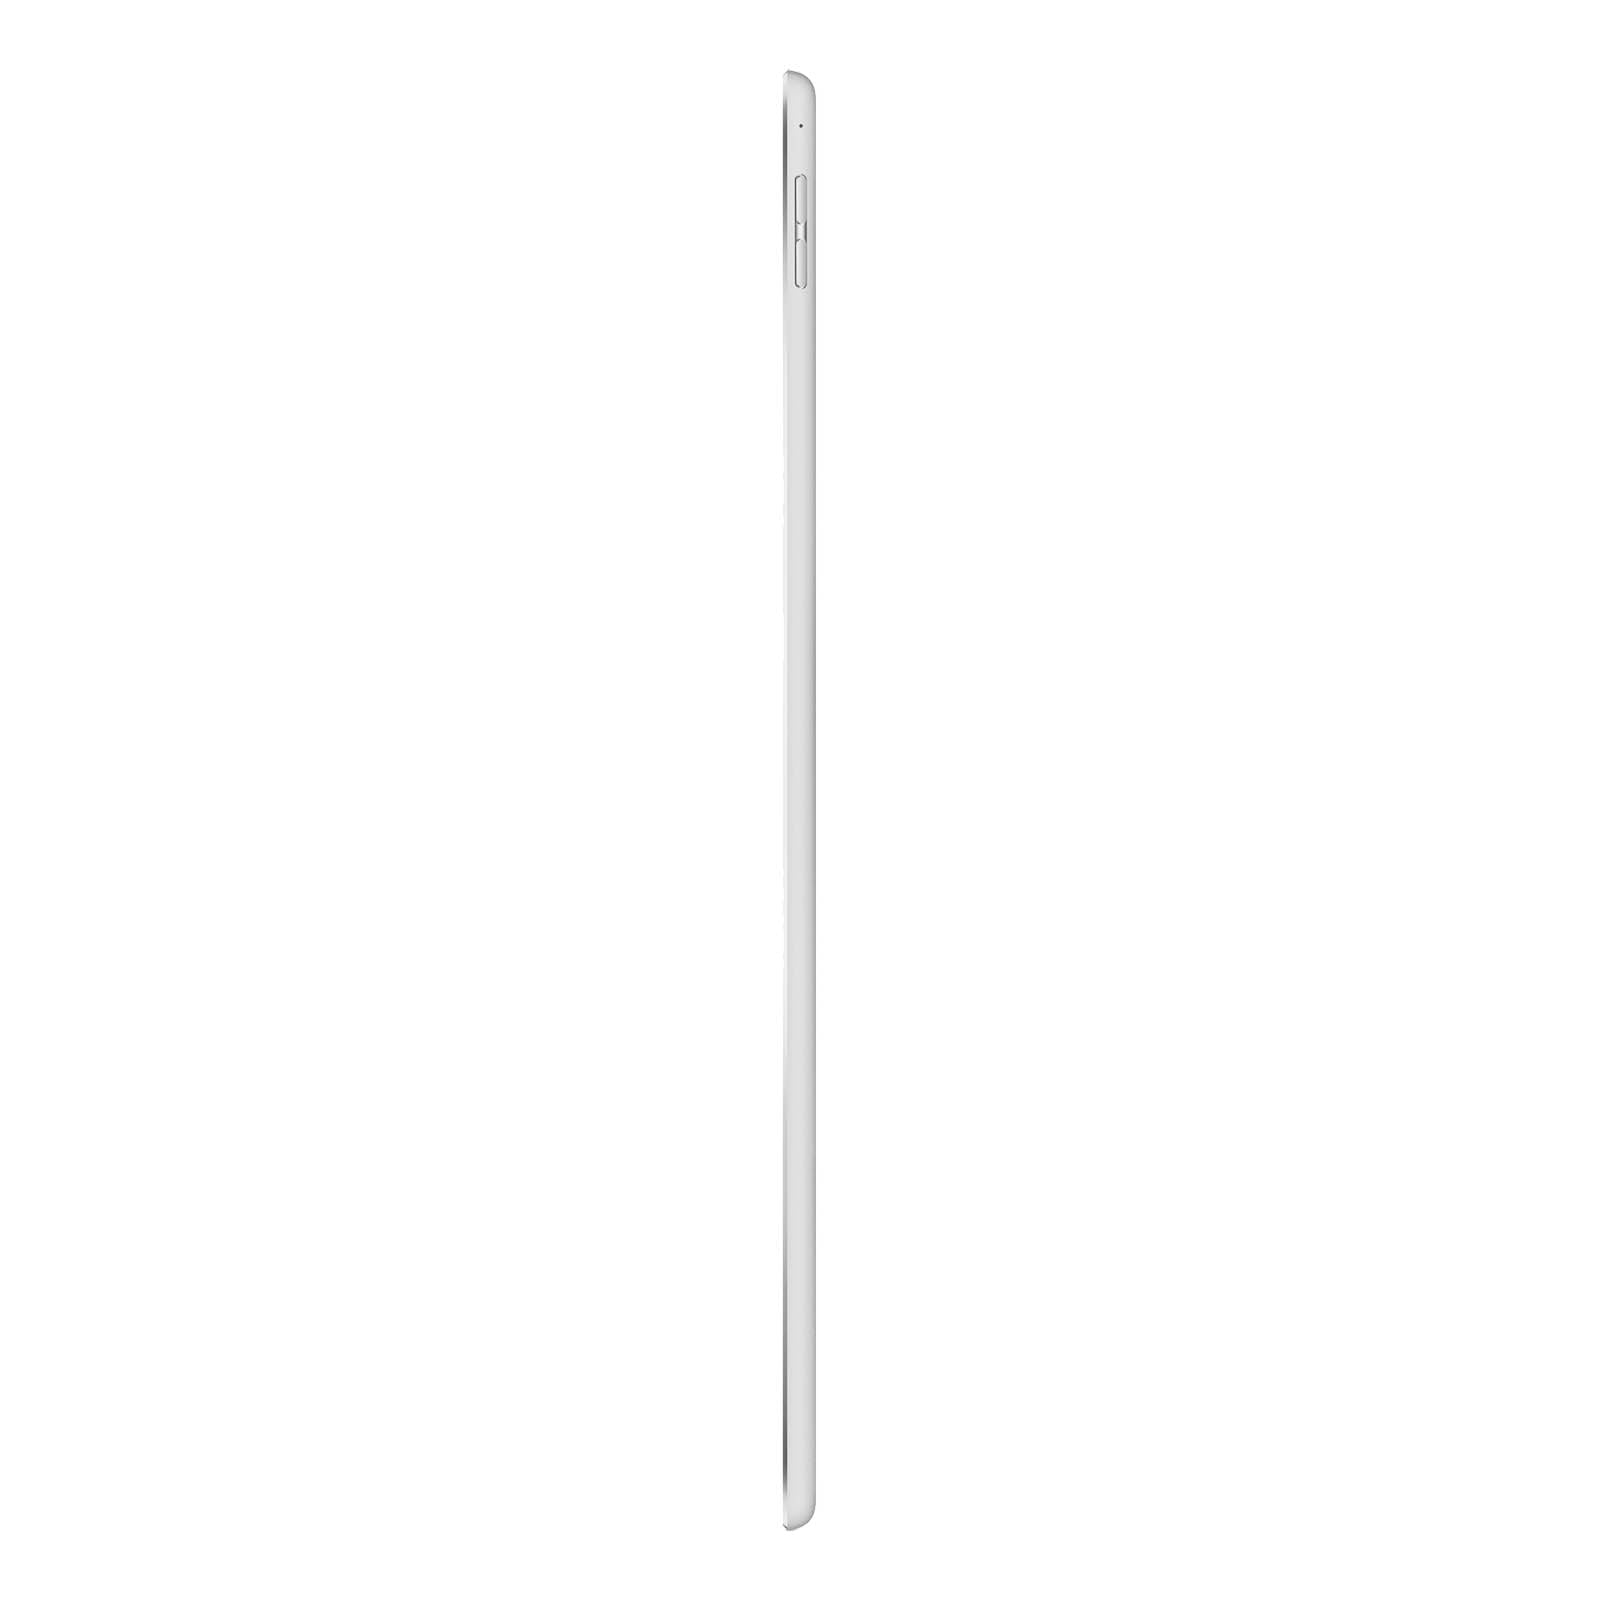 iPad Pro 12.9 Inch 2nd Gen 512GB Silver Very Good - WiFi